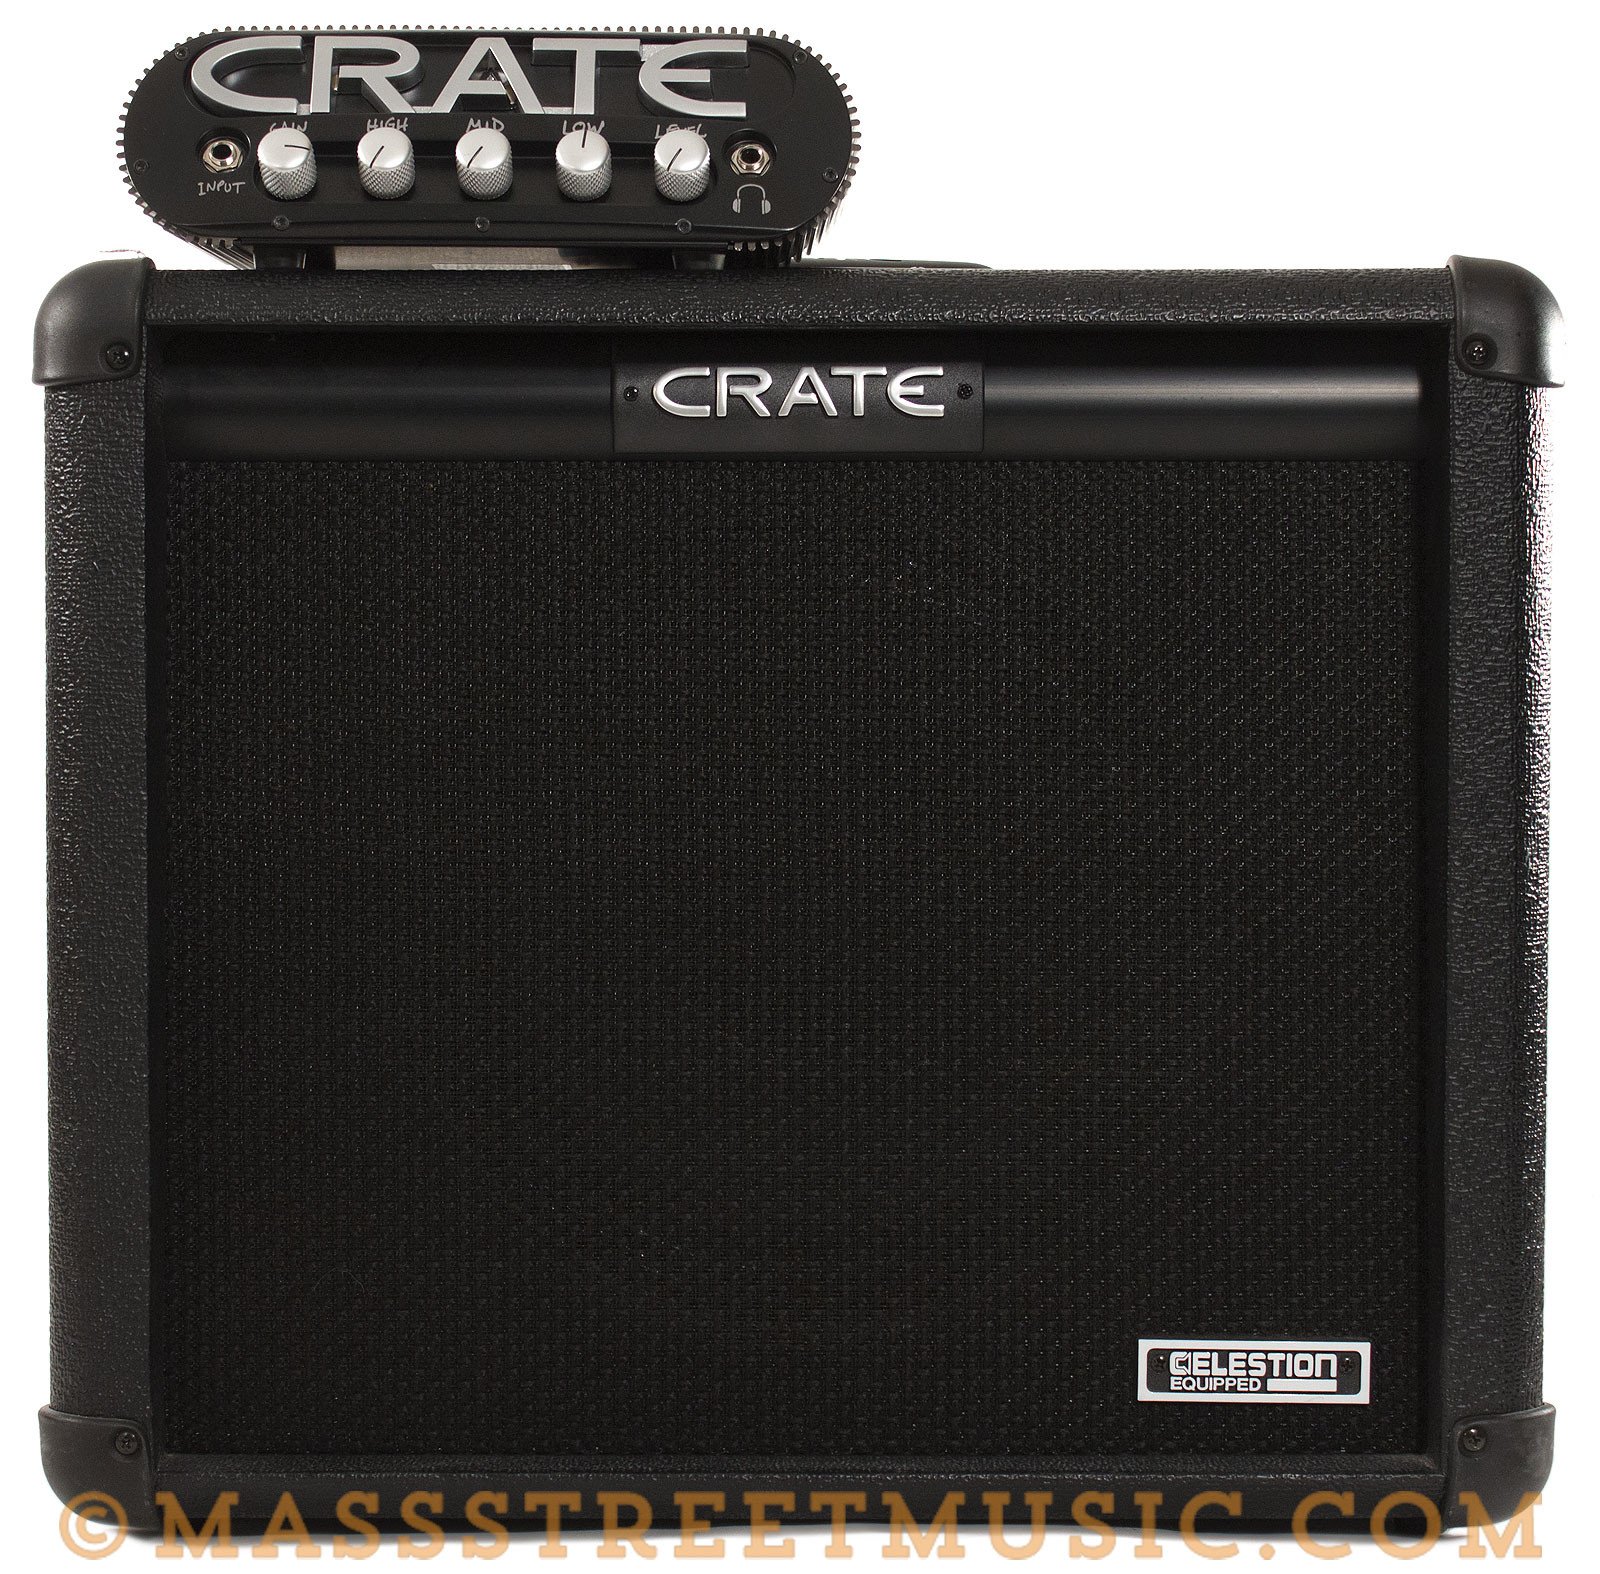 Crate amp serial number lookup